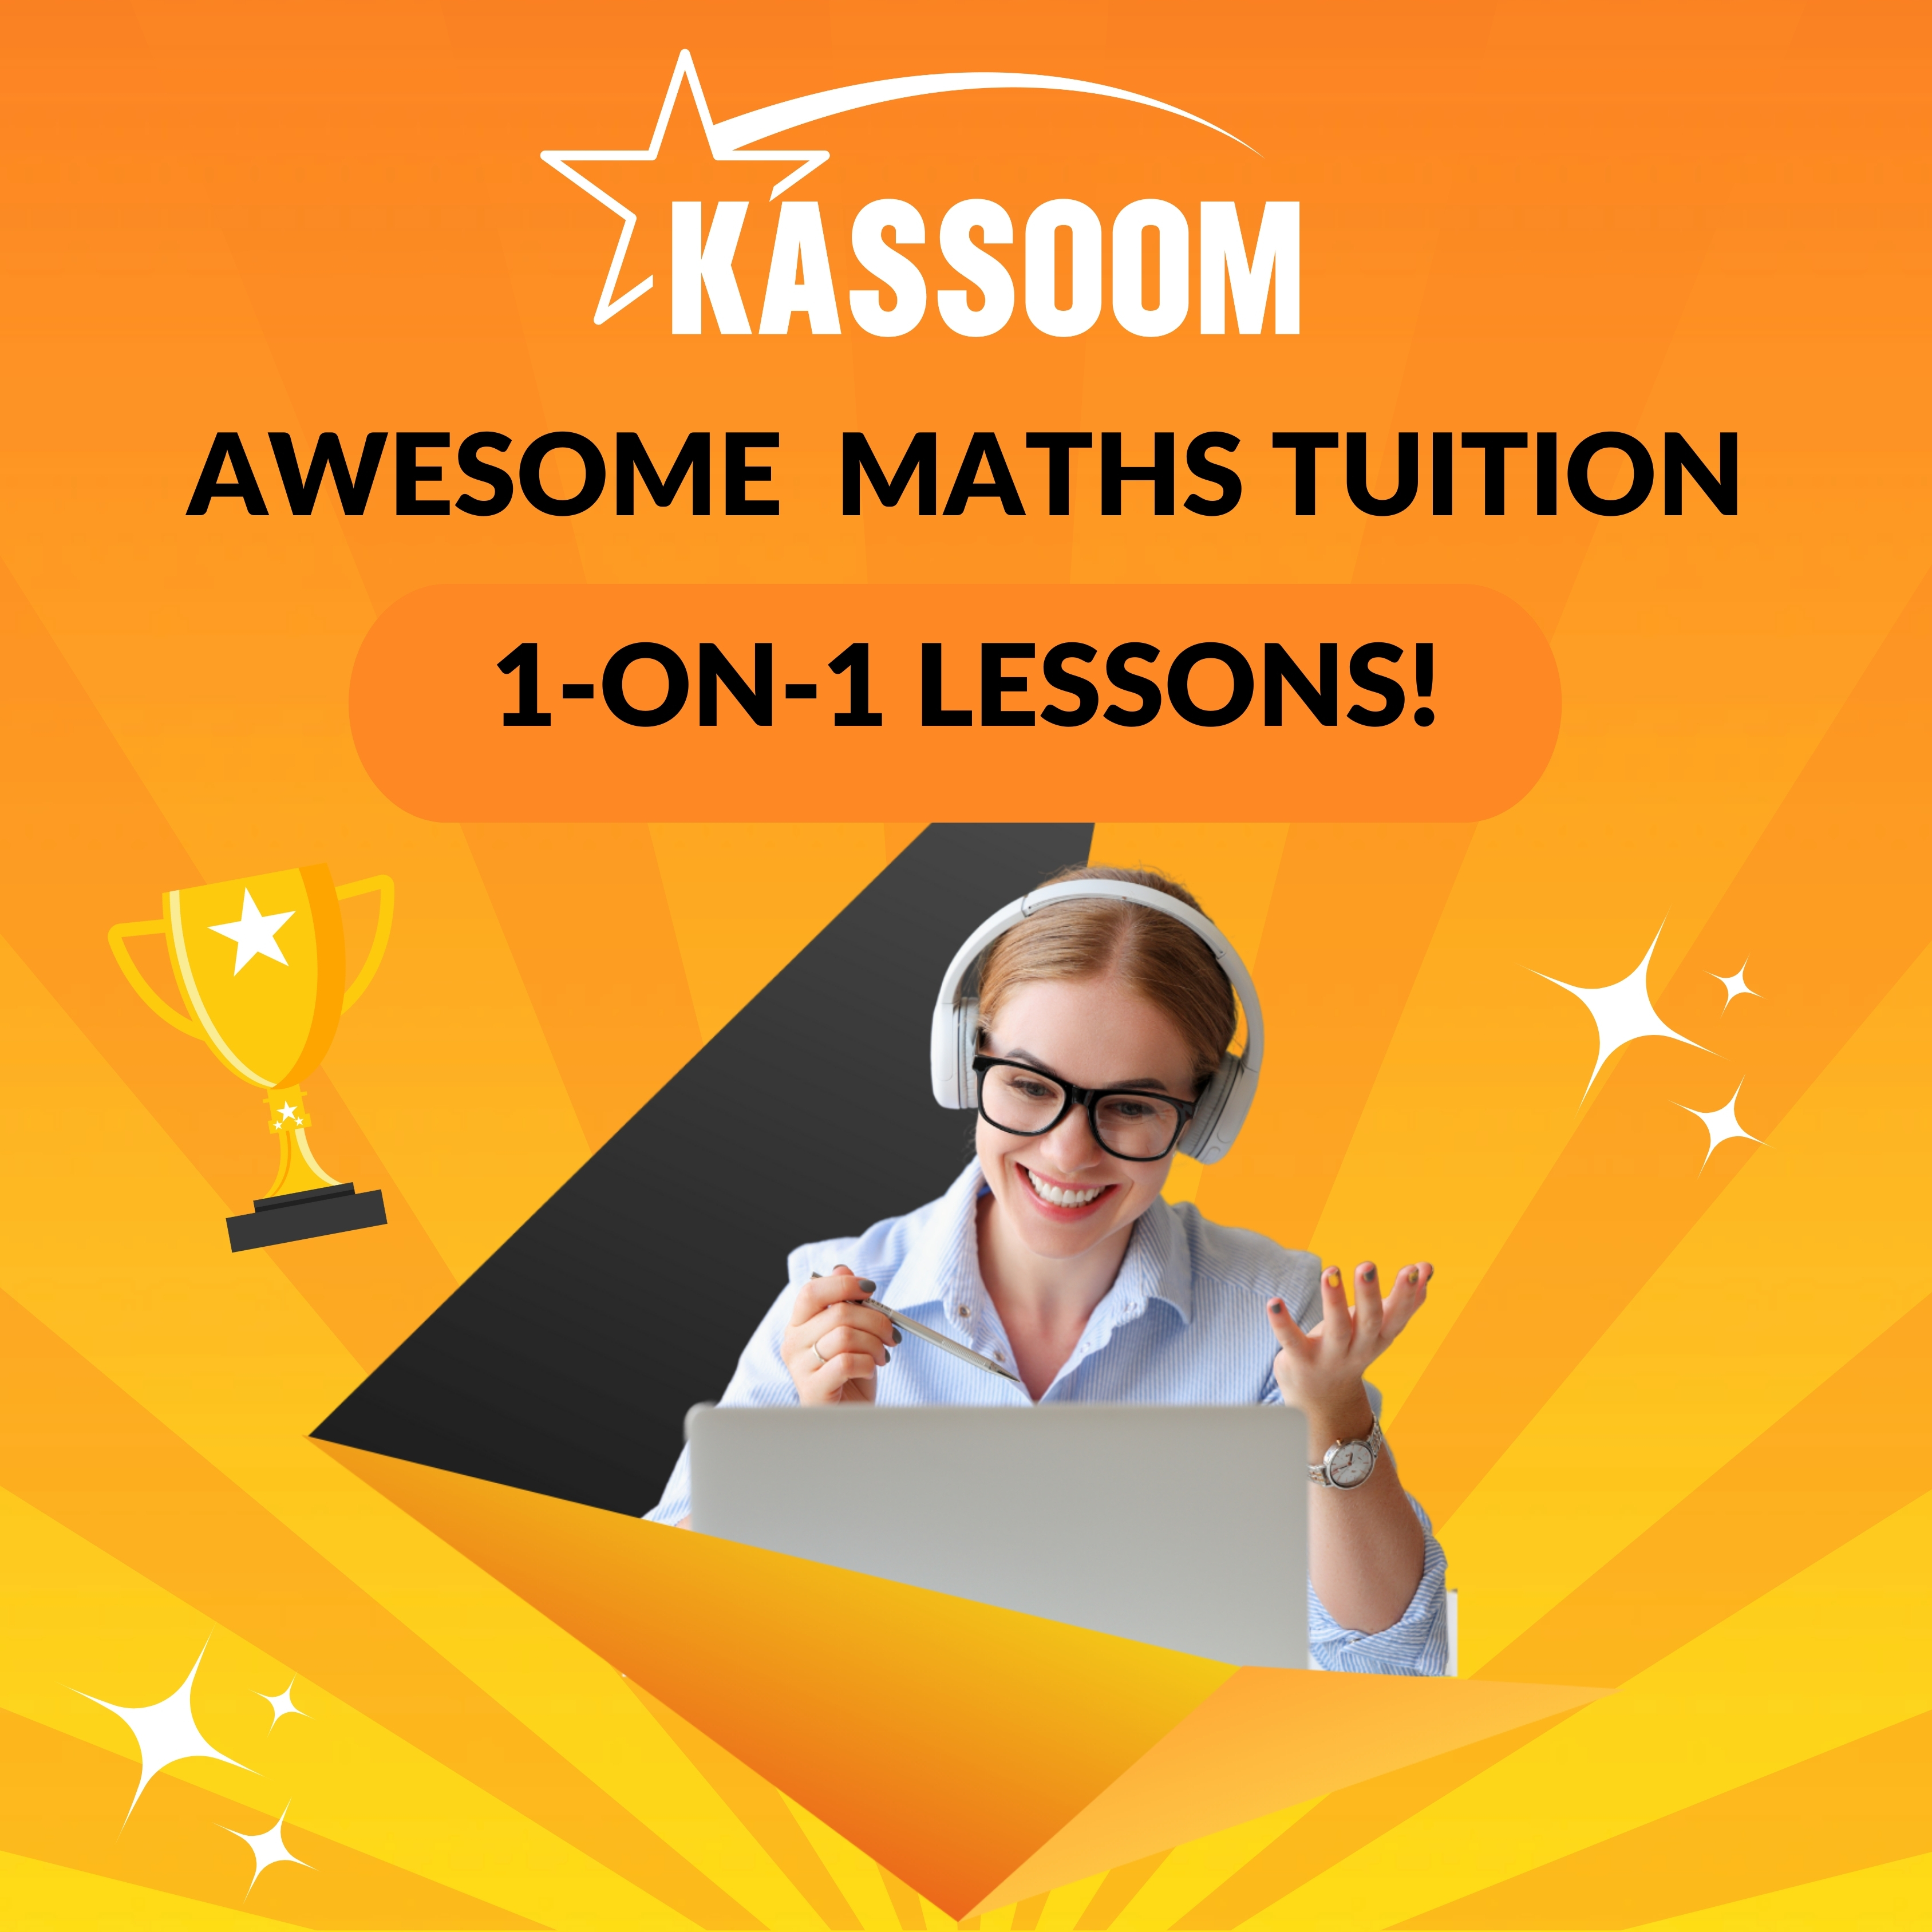 Awesome Maths Tutoring – Kassoom – Manchester